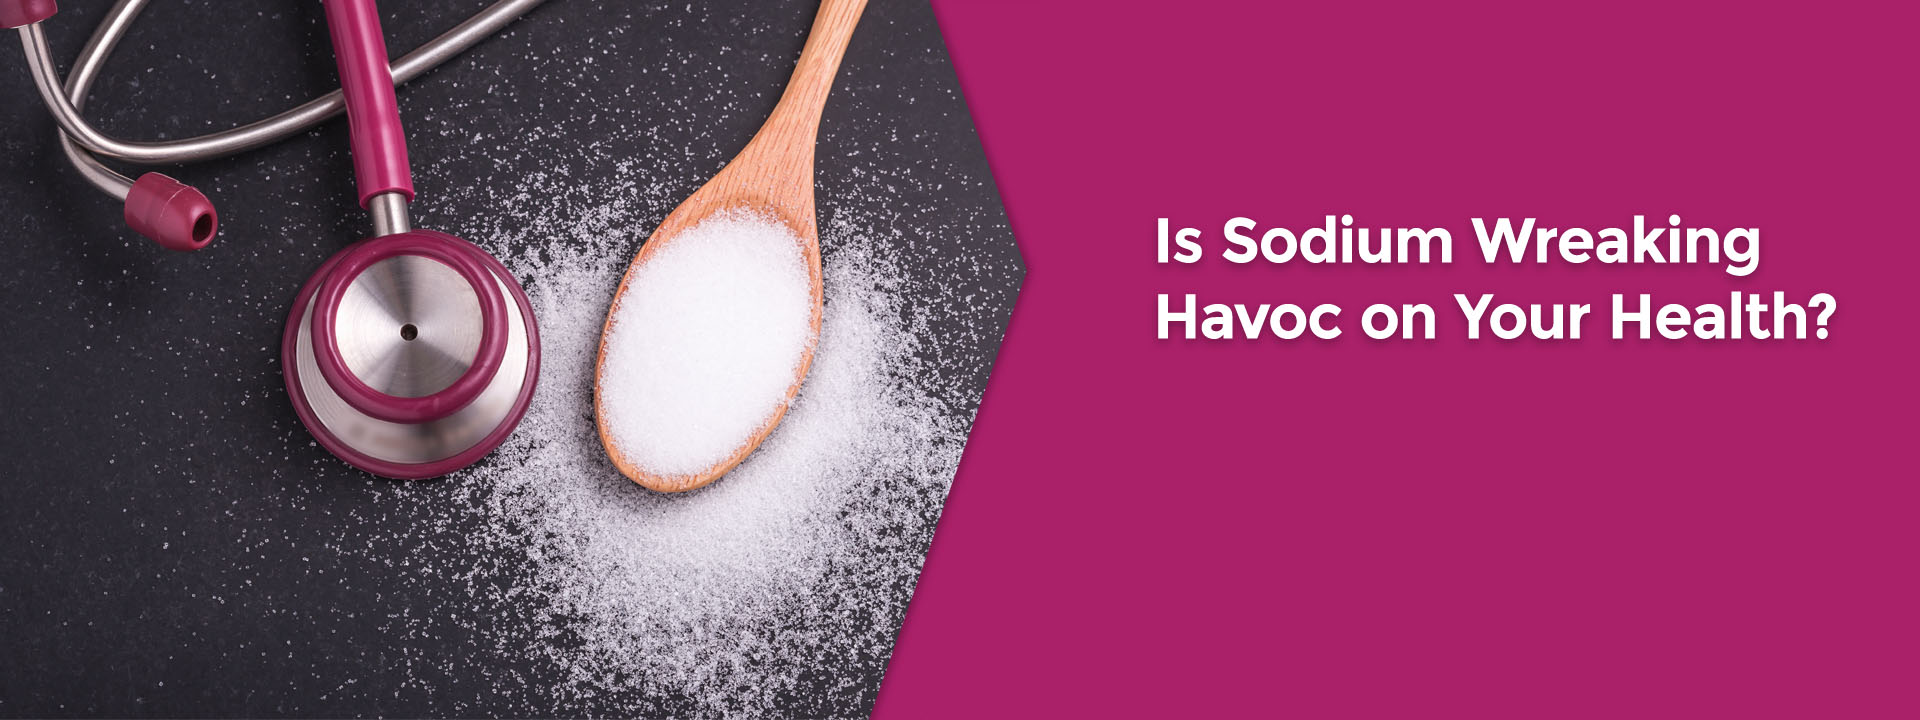 Is Sodium Quietly Wreaking Havoc on Your Health?